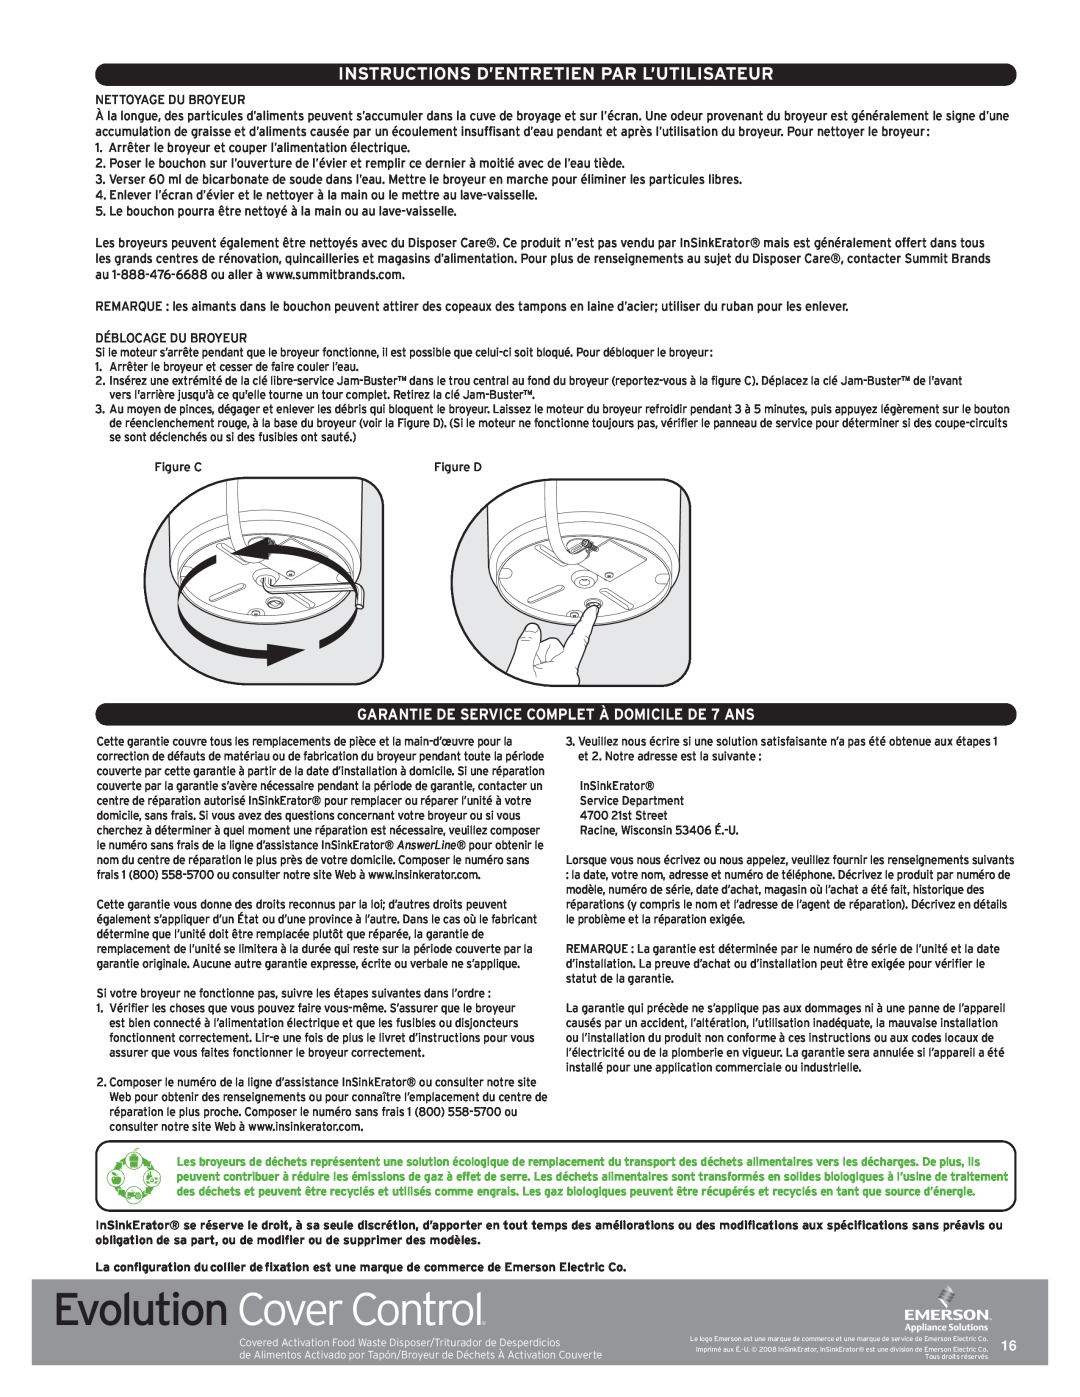 InSinkErator Evolution Series manual Instructions D’Entretien Par L’Utilisateur, Evolution Cover Control 